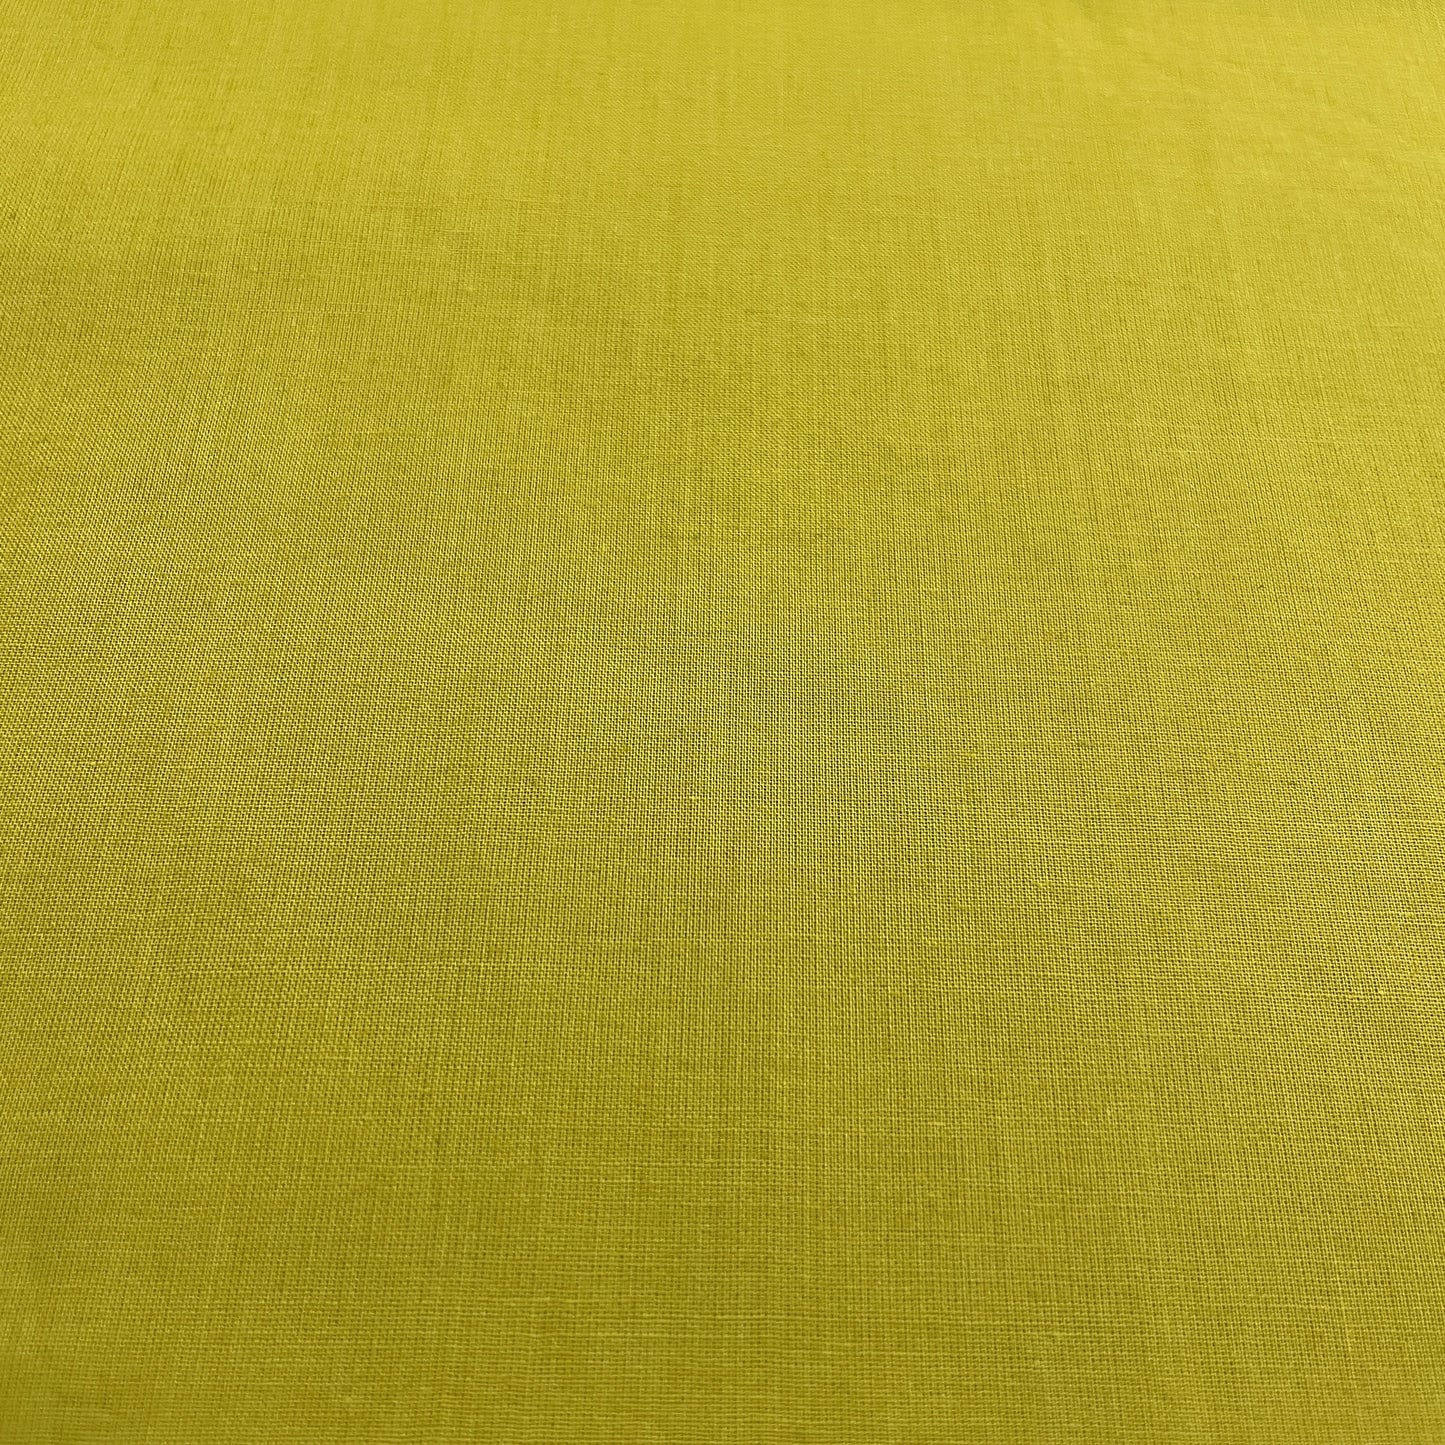 Premium Light Olive Green Solid Cotton Mulmul Fabric